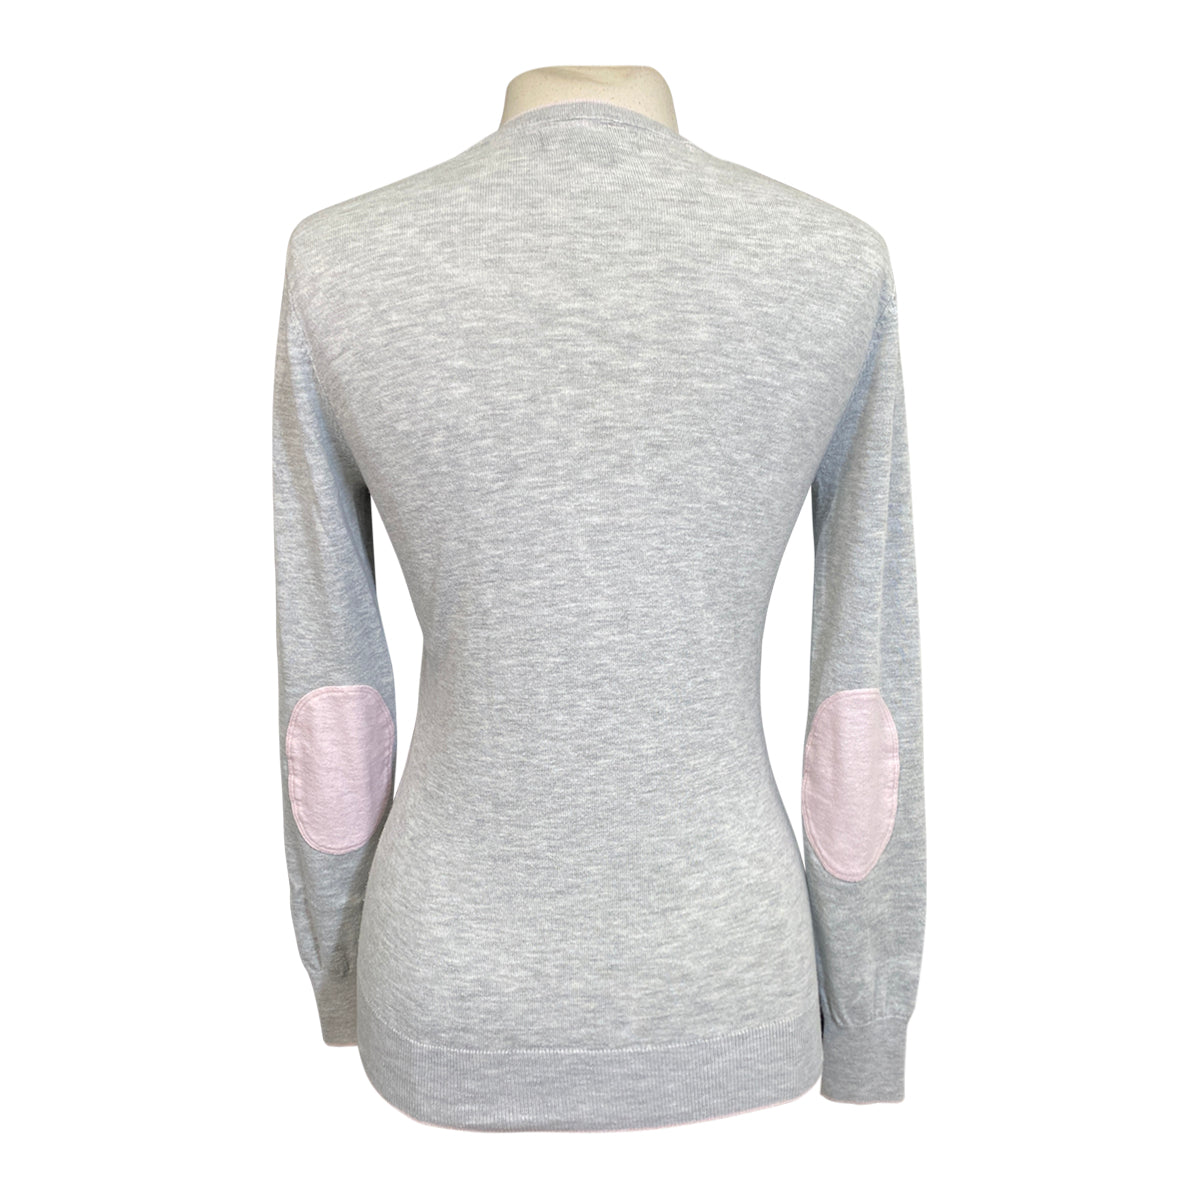 Essex Classics 'Trey' V-Neck Sweater in Grey/Baby Pink